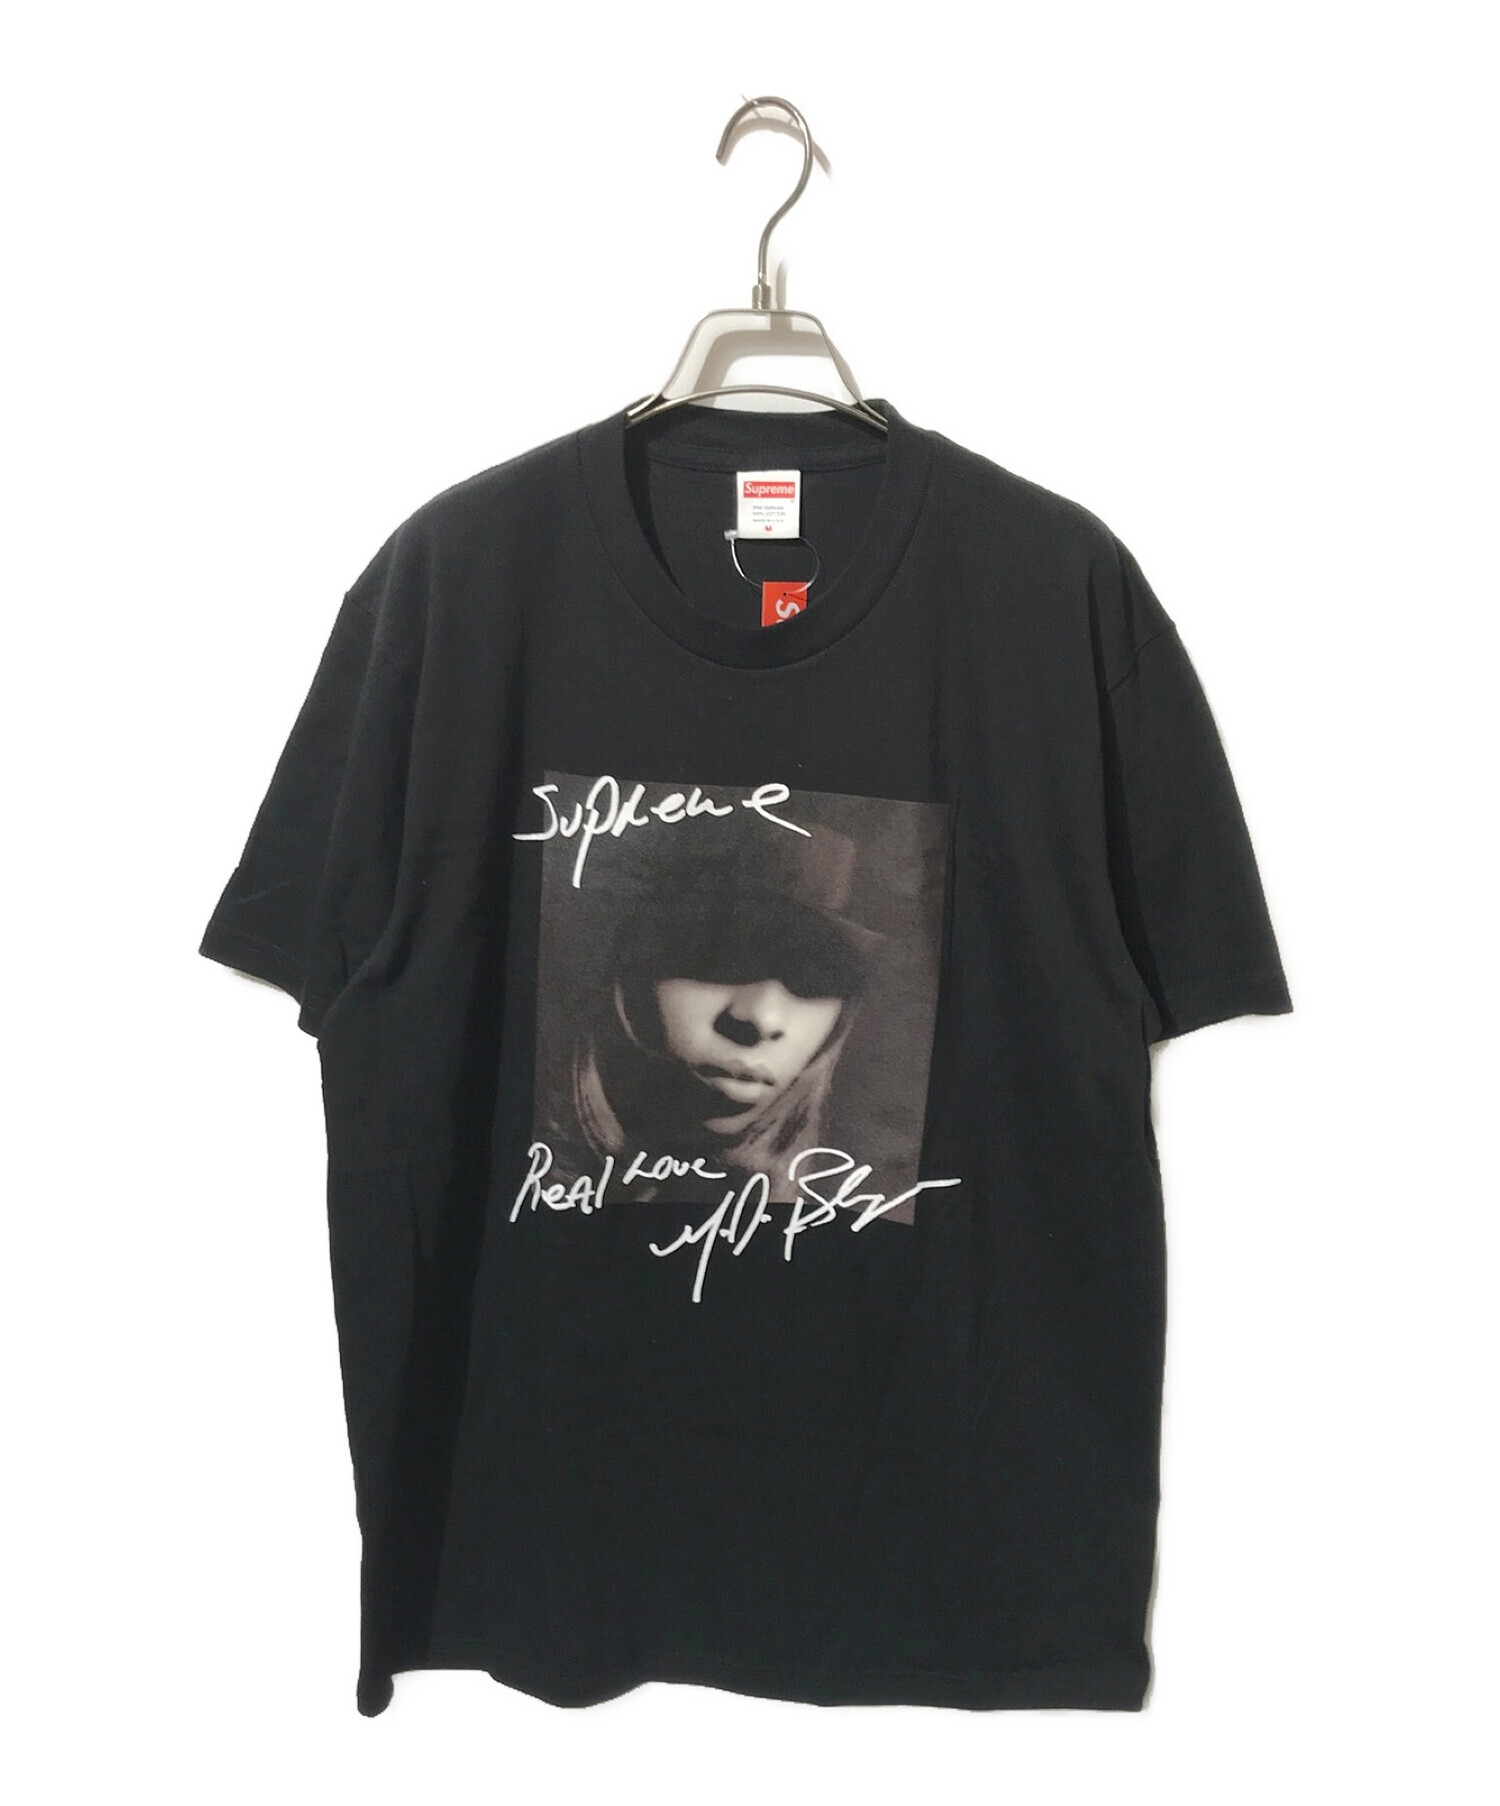 Supreme Mary J. Blige Tee 白 white S サイズ - Tシャツ/カットソー ...